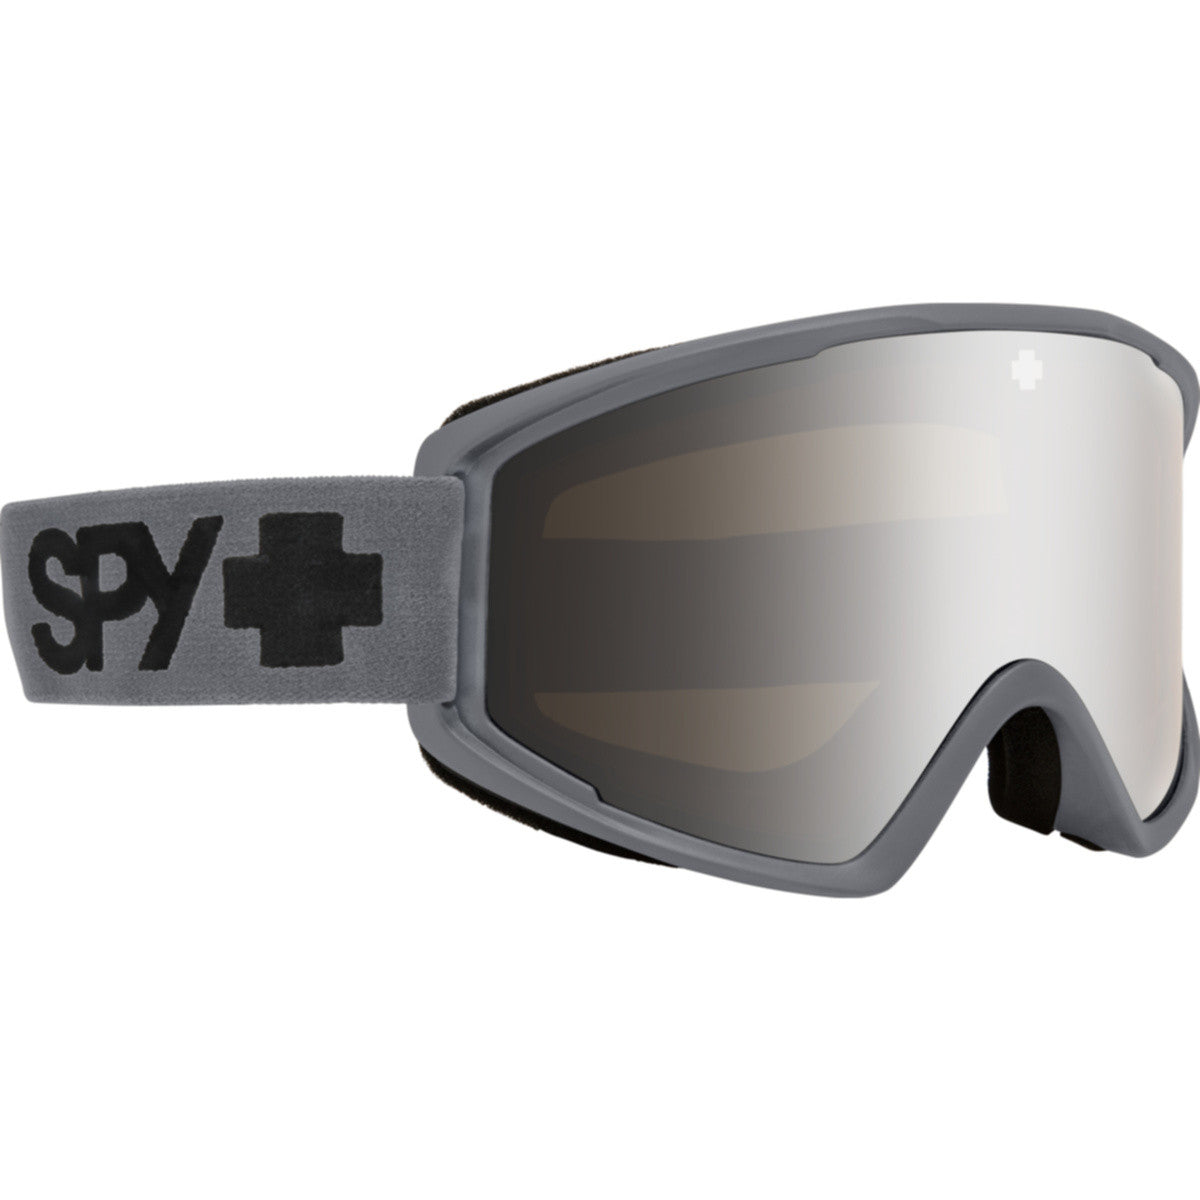 Spy Crusher Elite Goggles  Grey Matte Medium-Large M-L 54-61